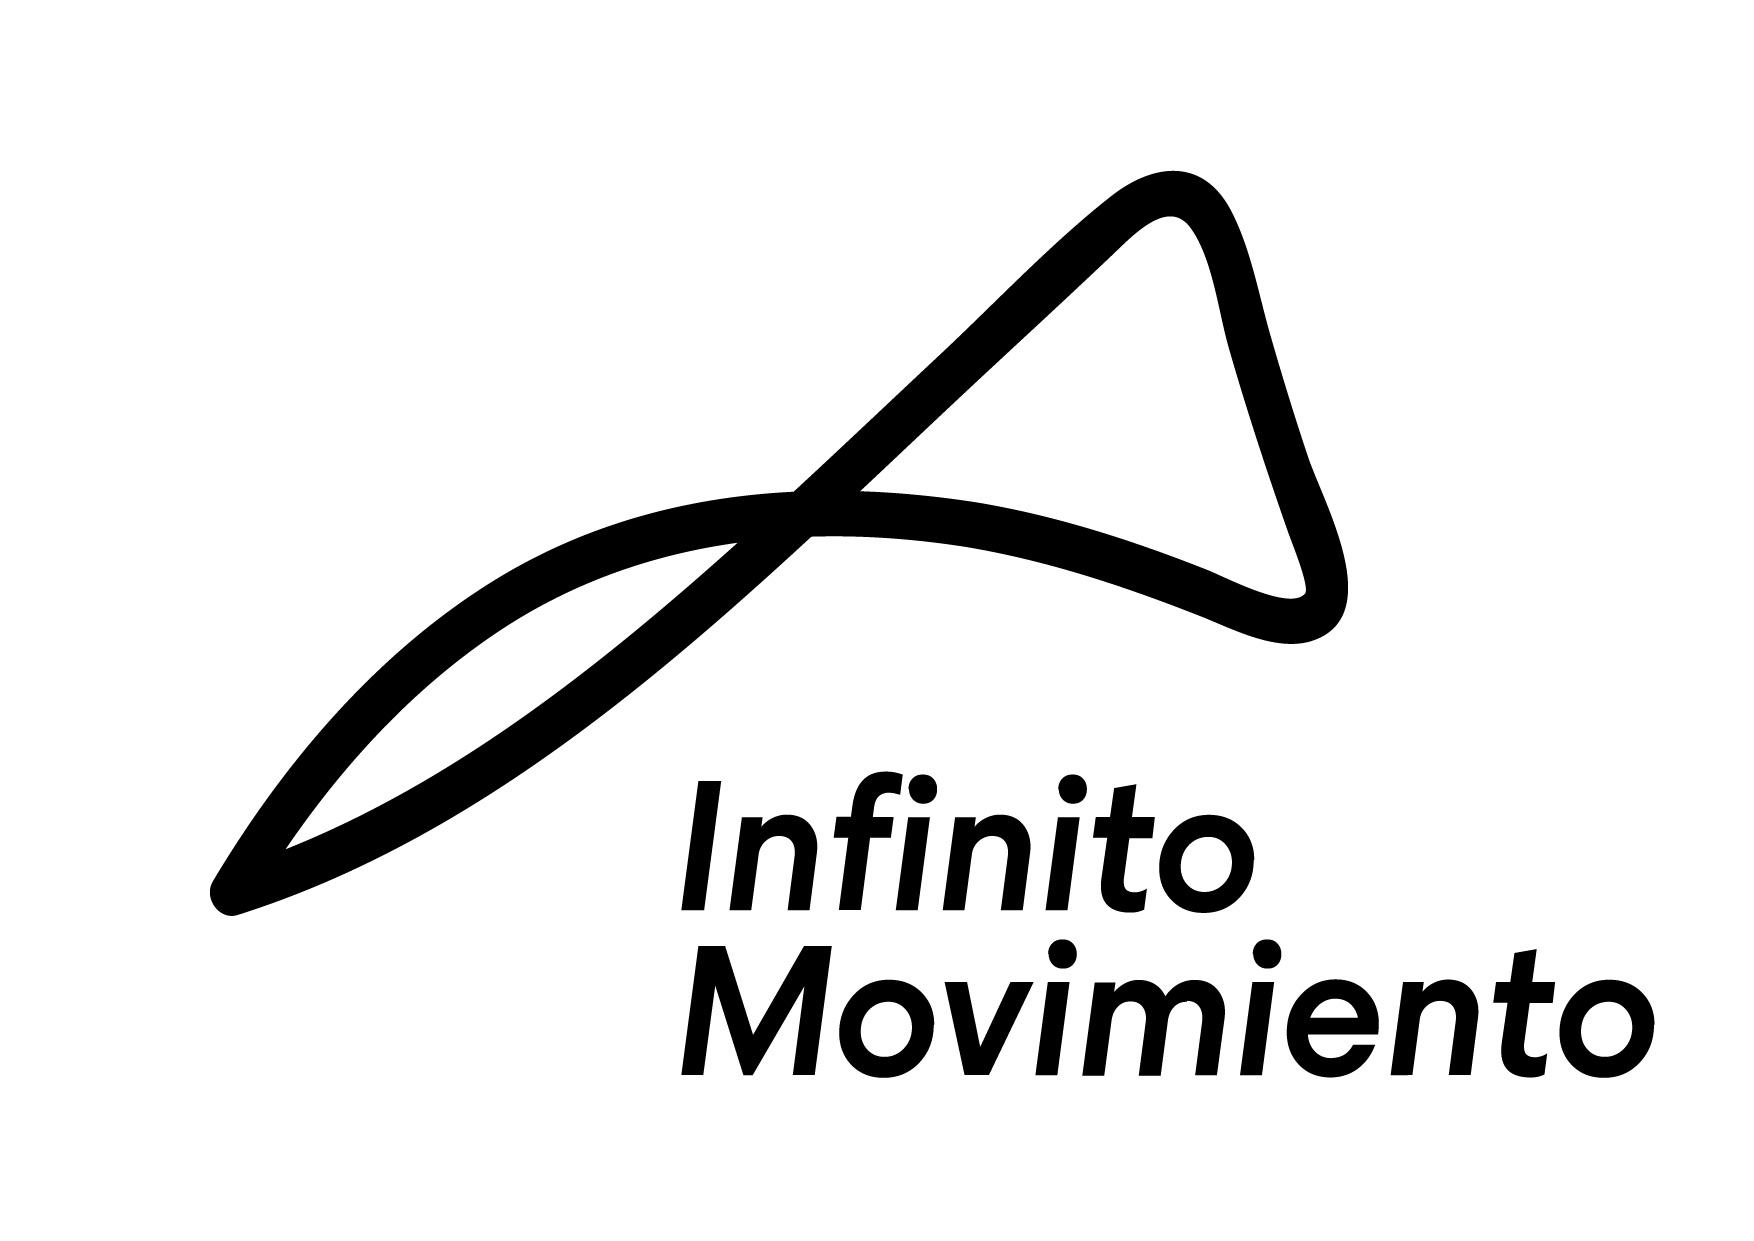 Infinito movimiento